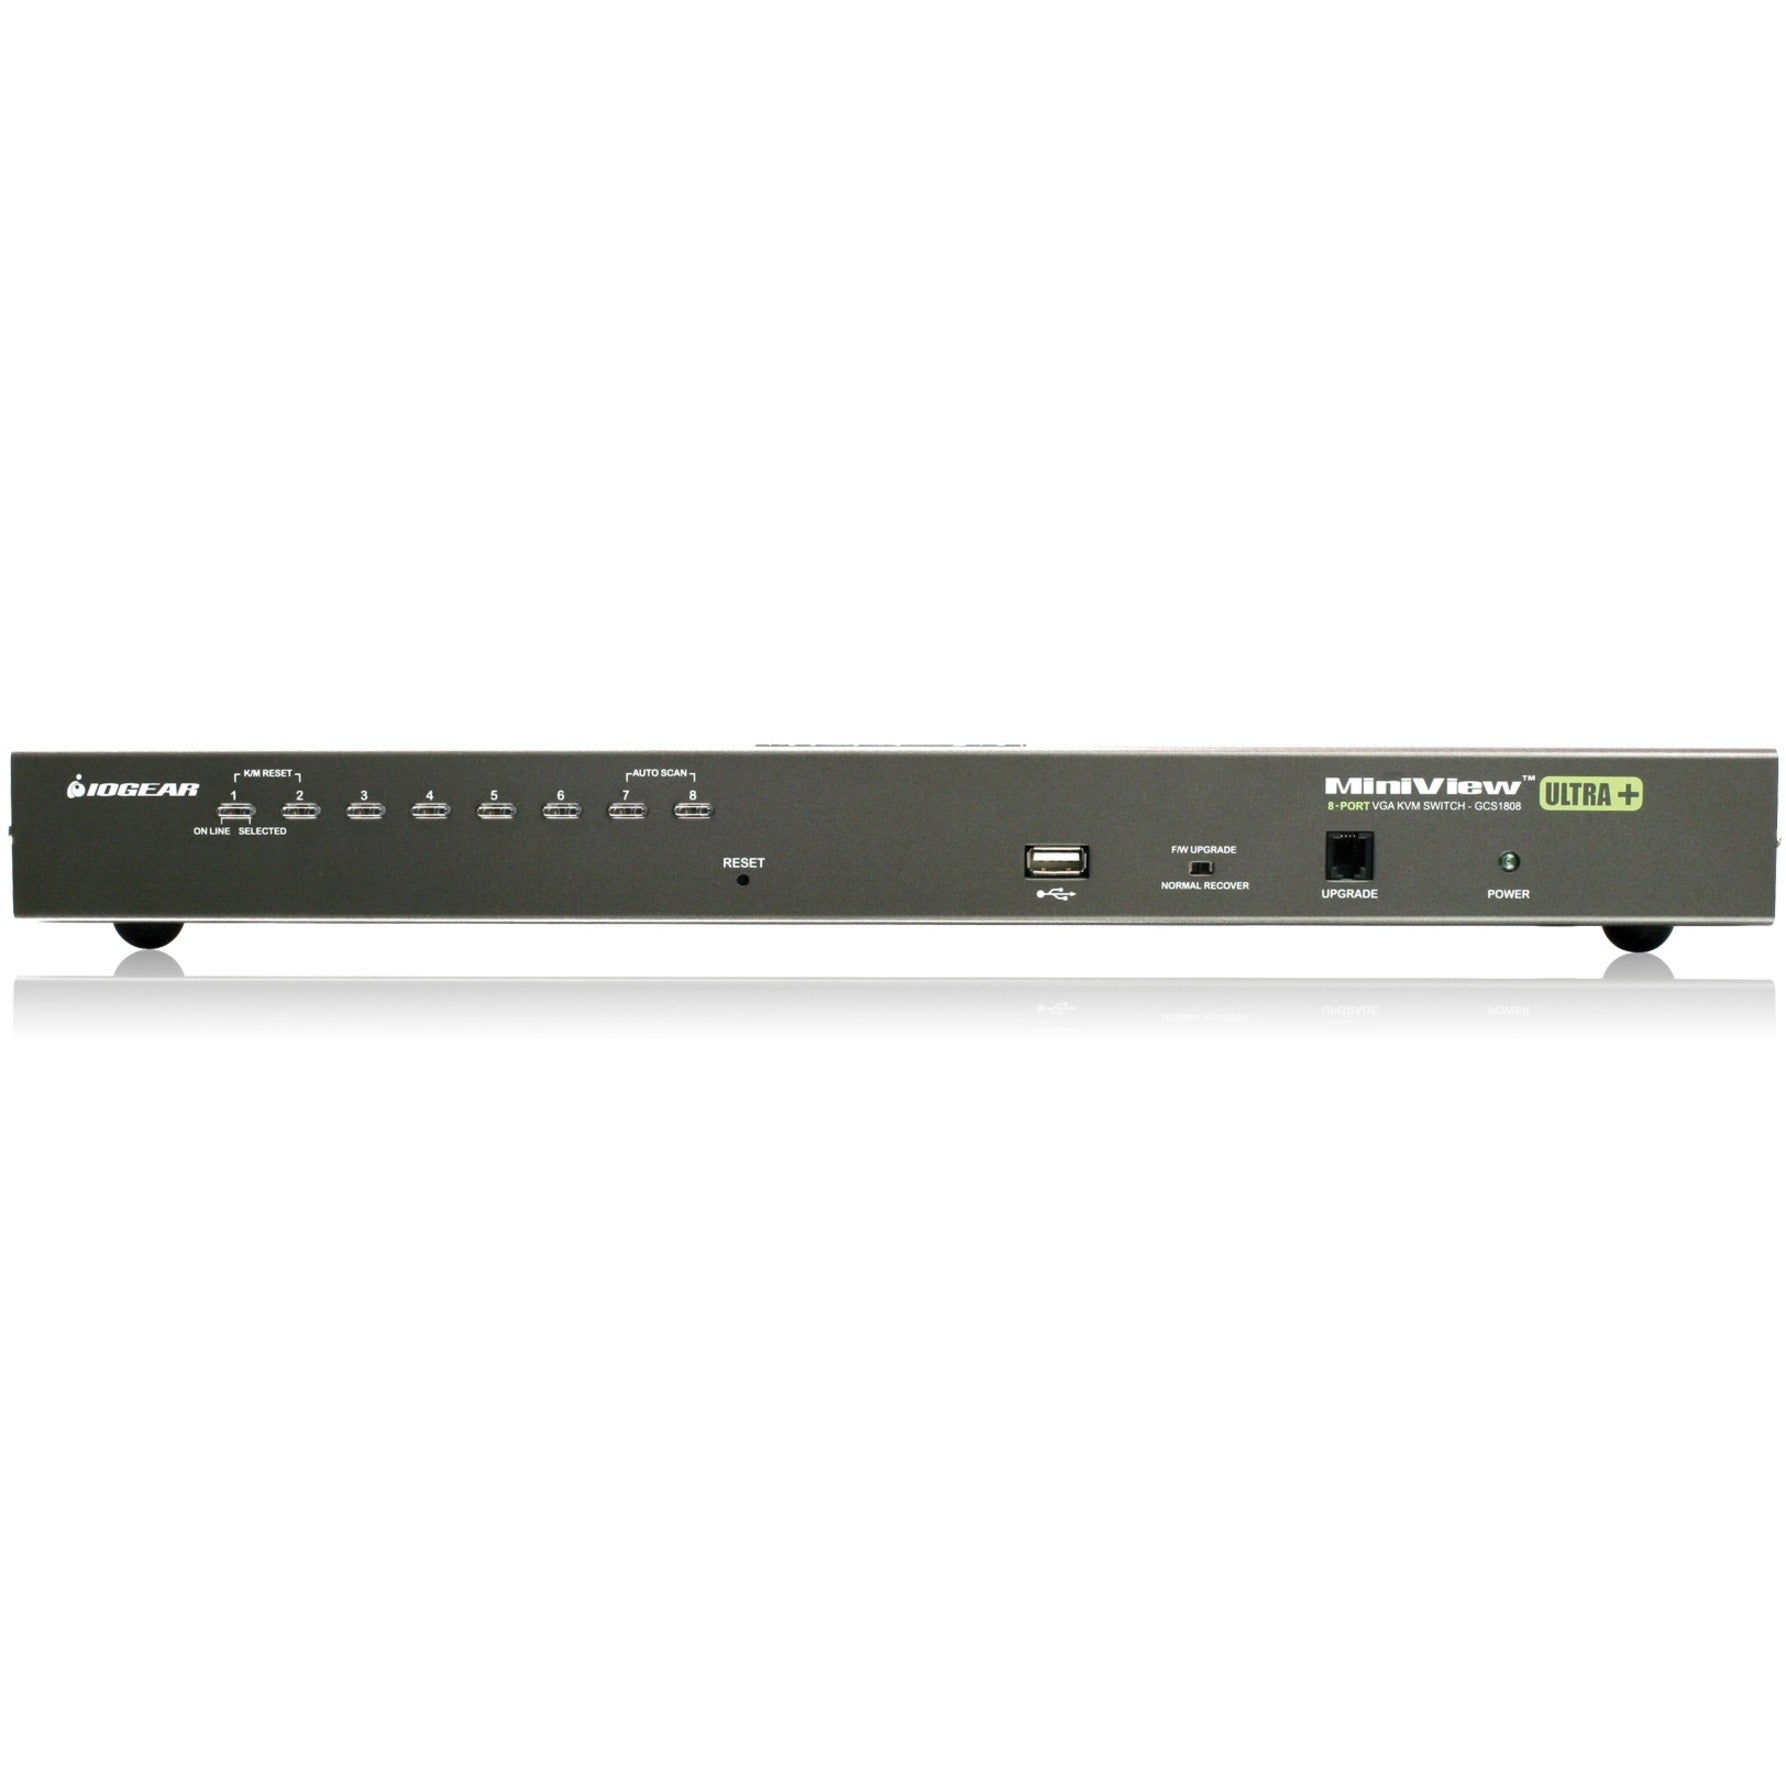 IOGEAR GCS1808 Combo KVM Switch, 8-Port Rack-Mountable KVM Switchbox